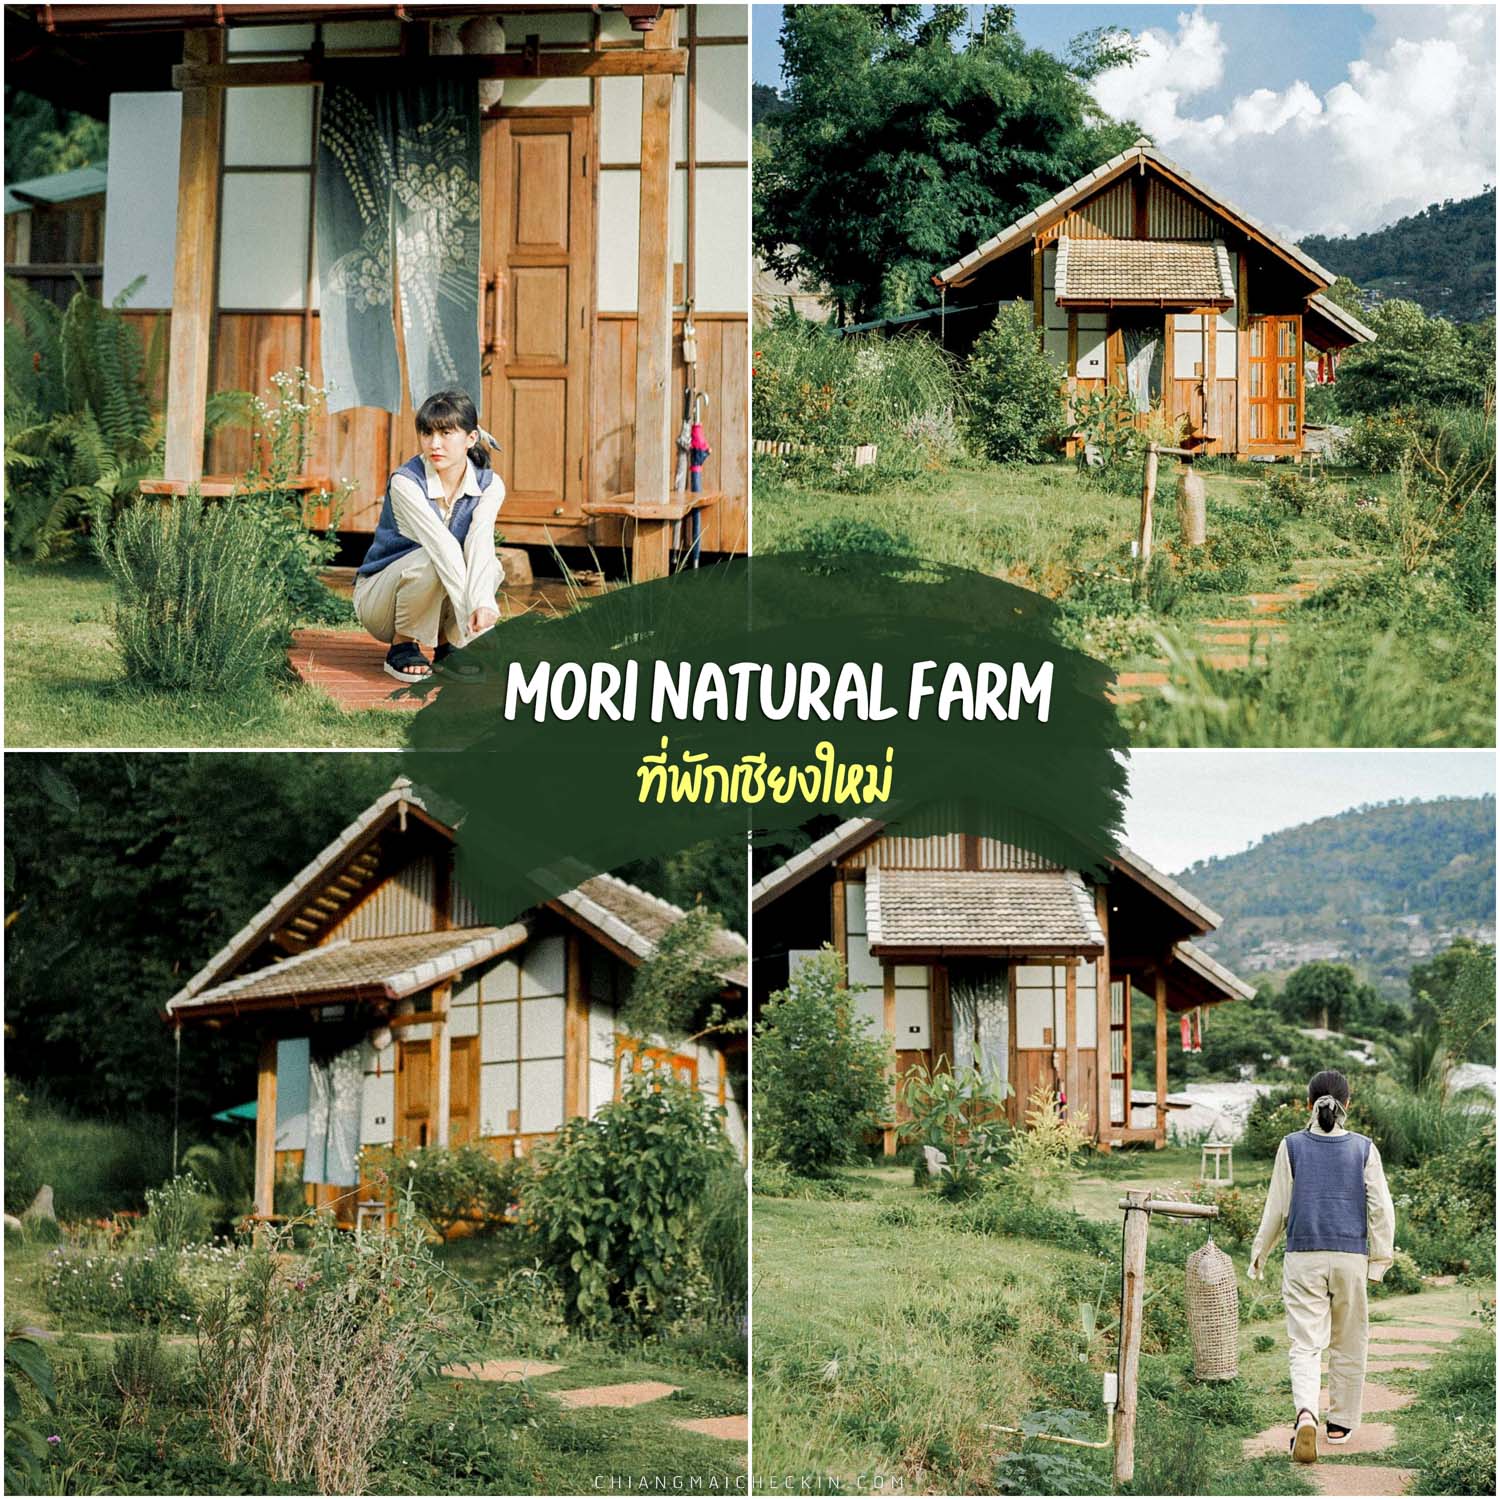 Mori-Natural-Farm-เชียงใหม่  ที่พักเชียงใหม่,วิวหลักล้าน,โรงแรม,รีสอร์ท,ป่า,เขา,ธรรมชาติ,chiangmai